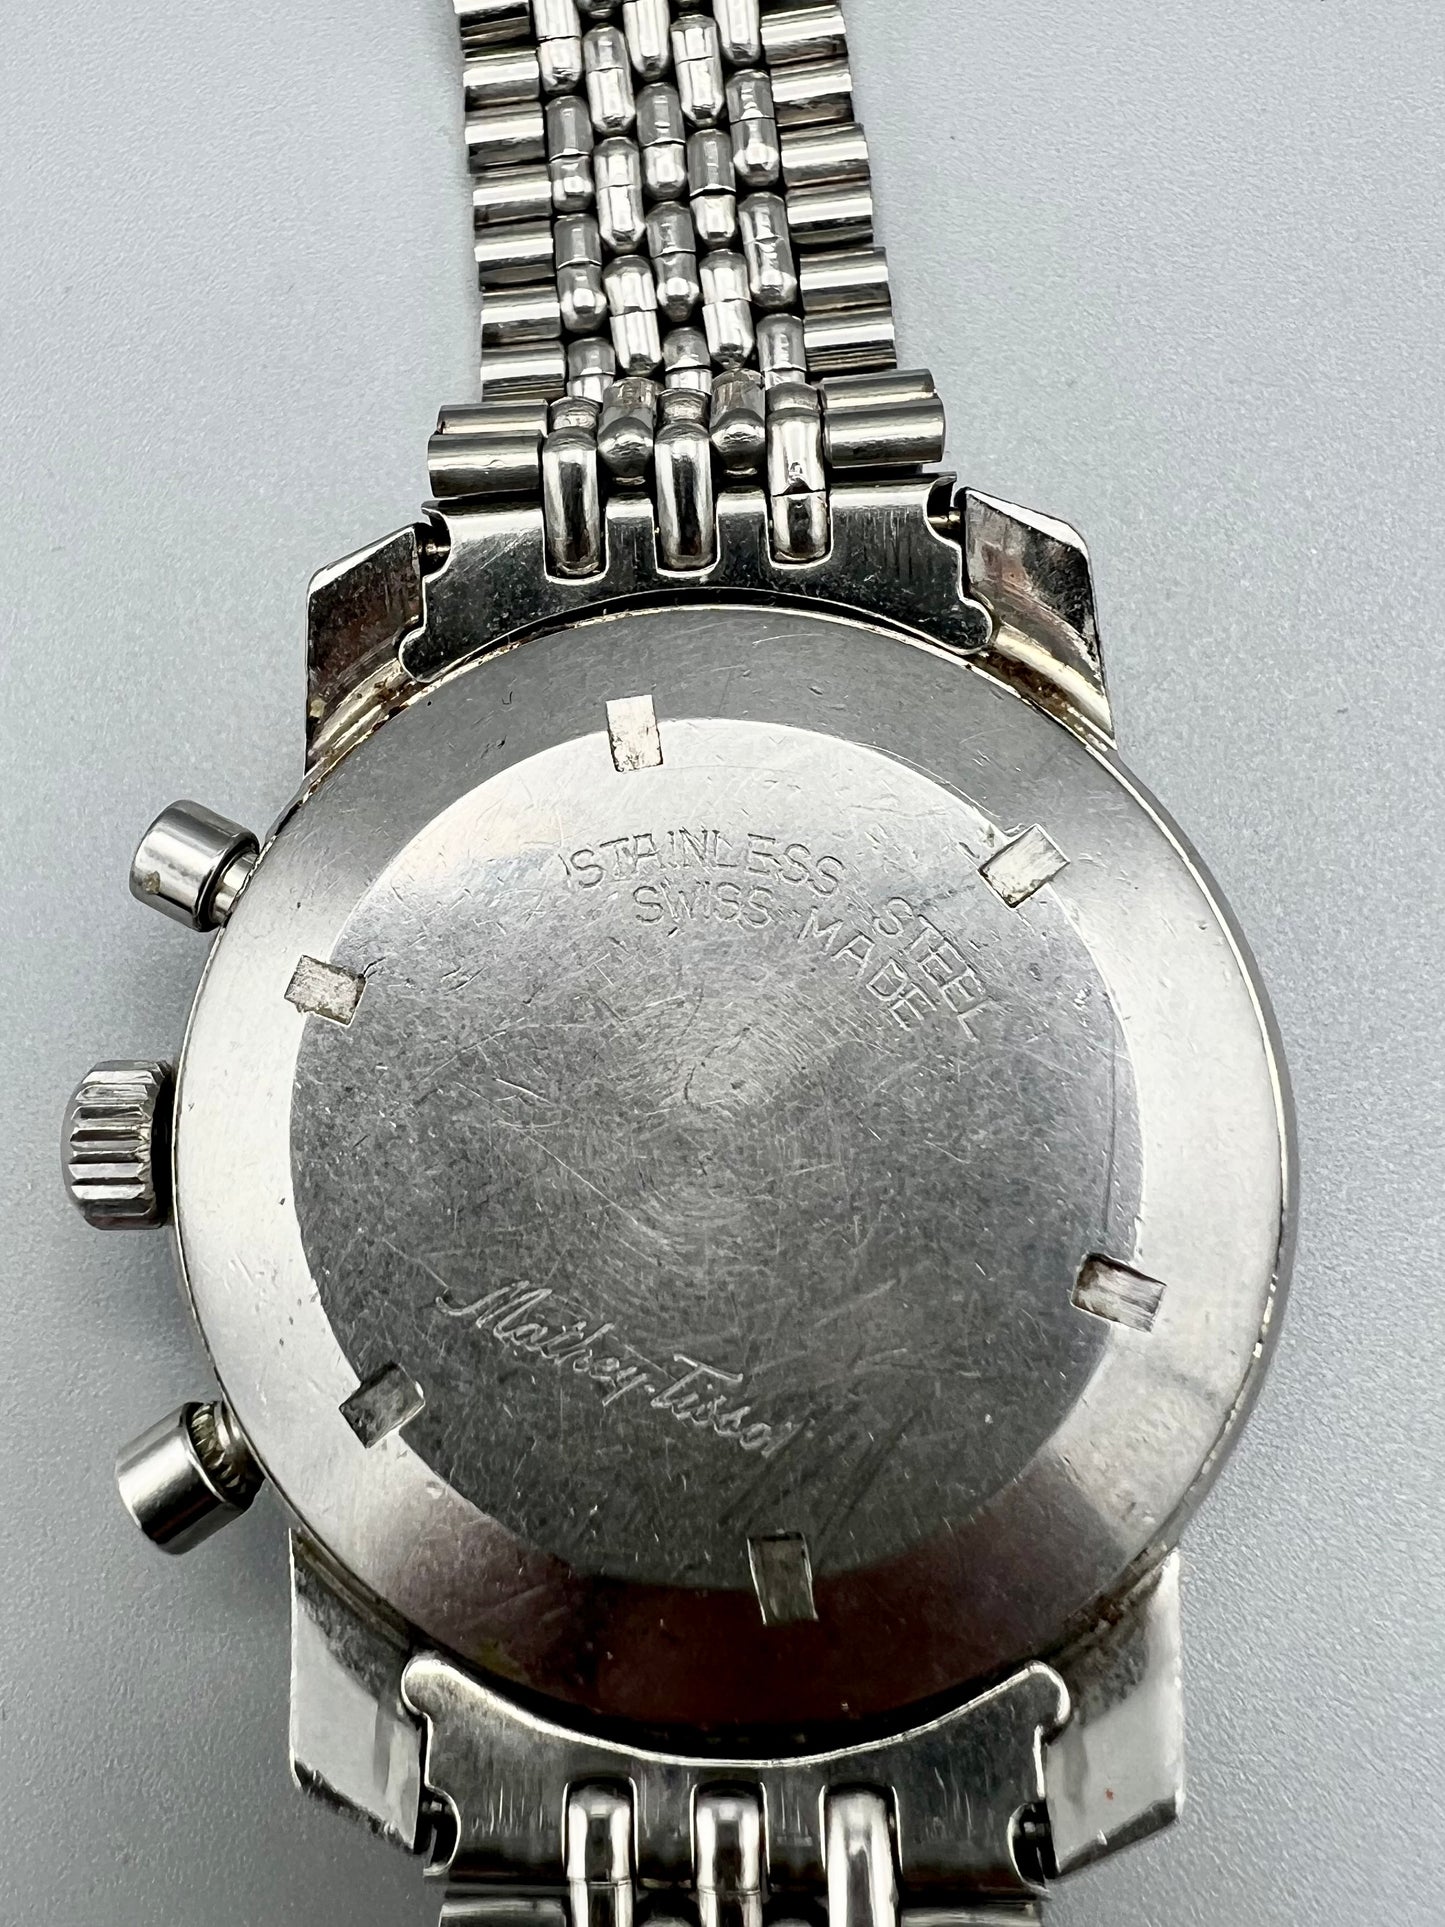 Mathey-Tissot, Valjoux 72 Chronograph Singer "Paul Newman" Dial, 1970